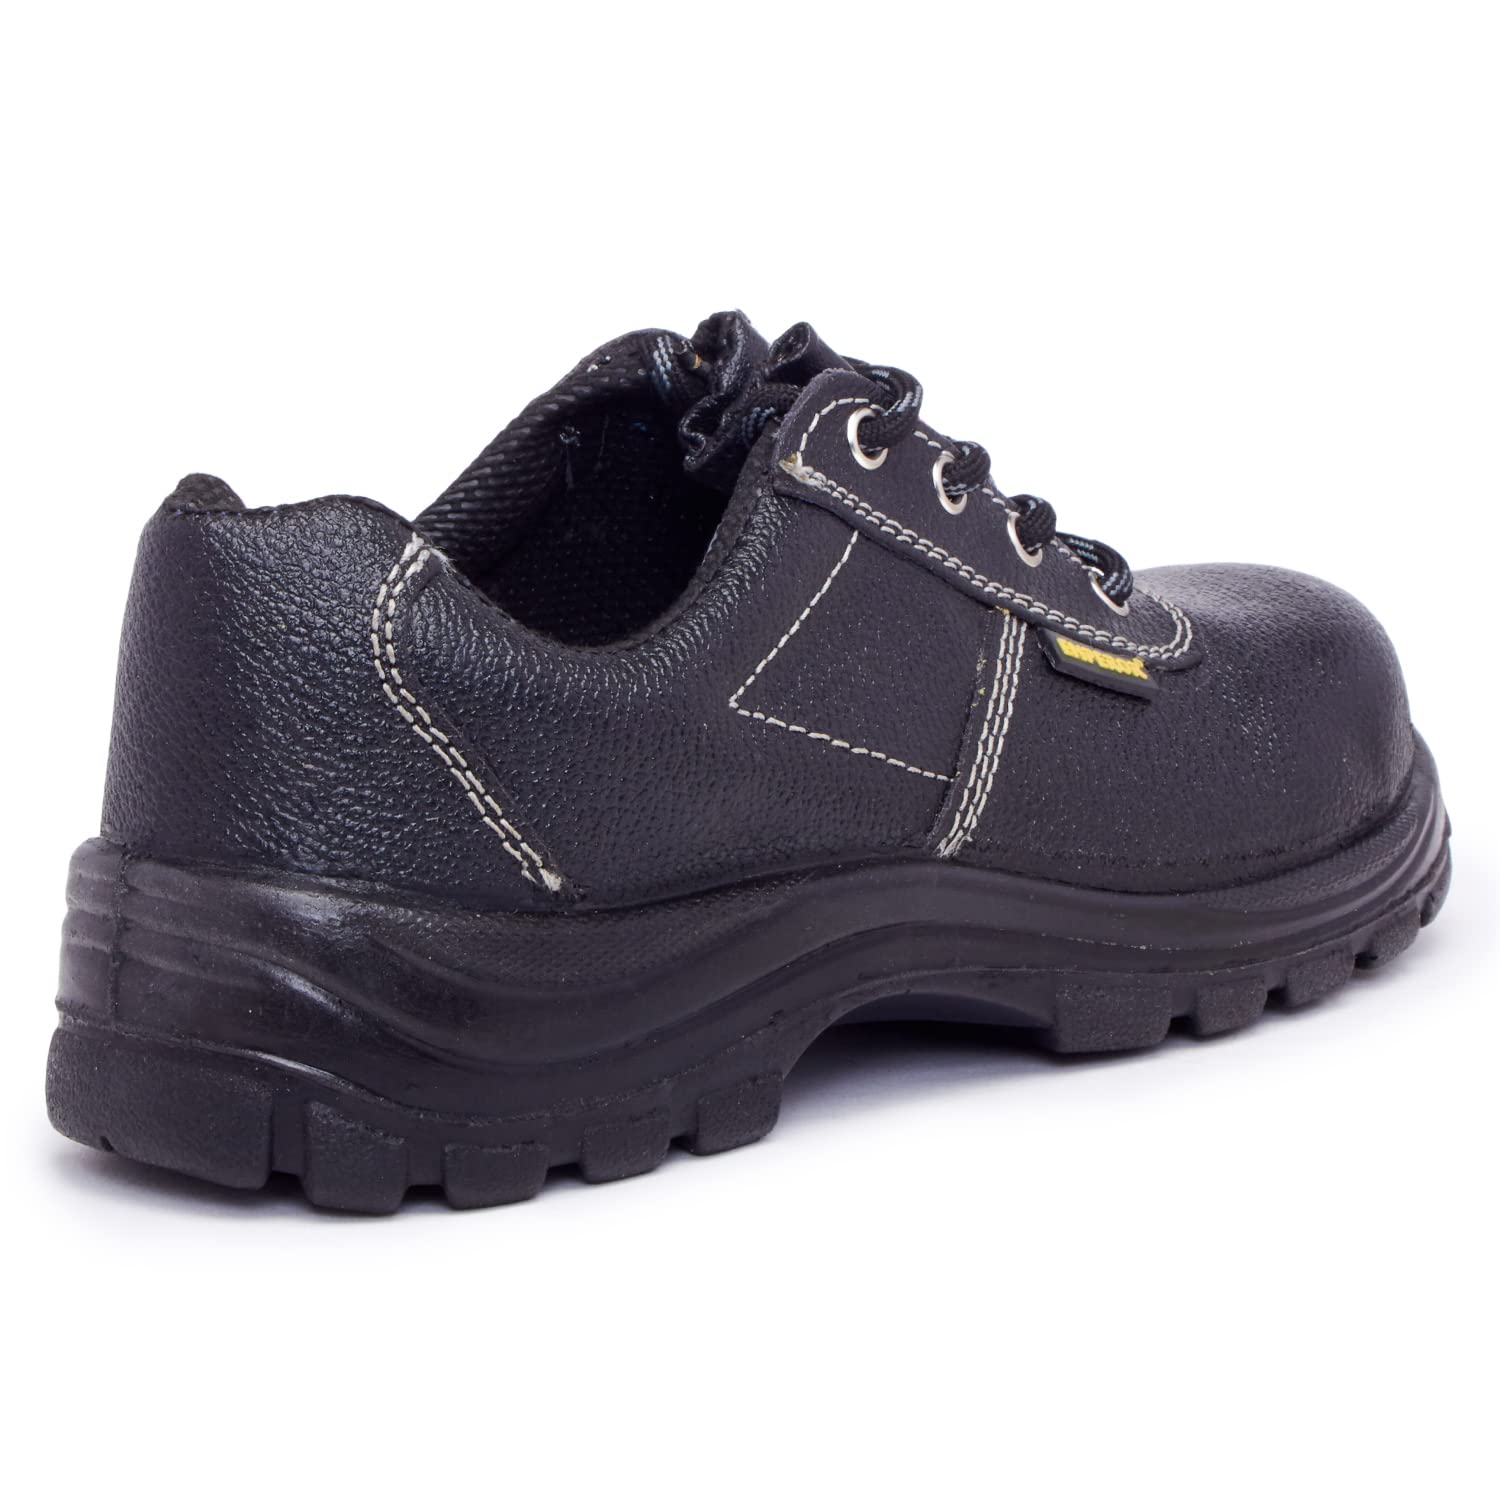 Emperor Steel Toe Leather Safety Shoe DUKE